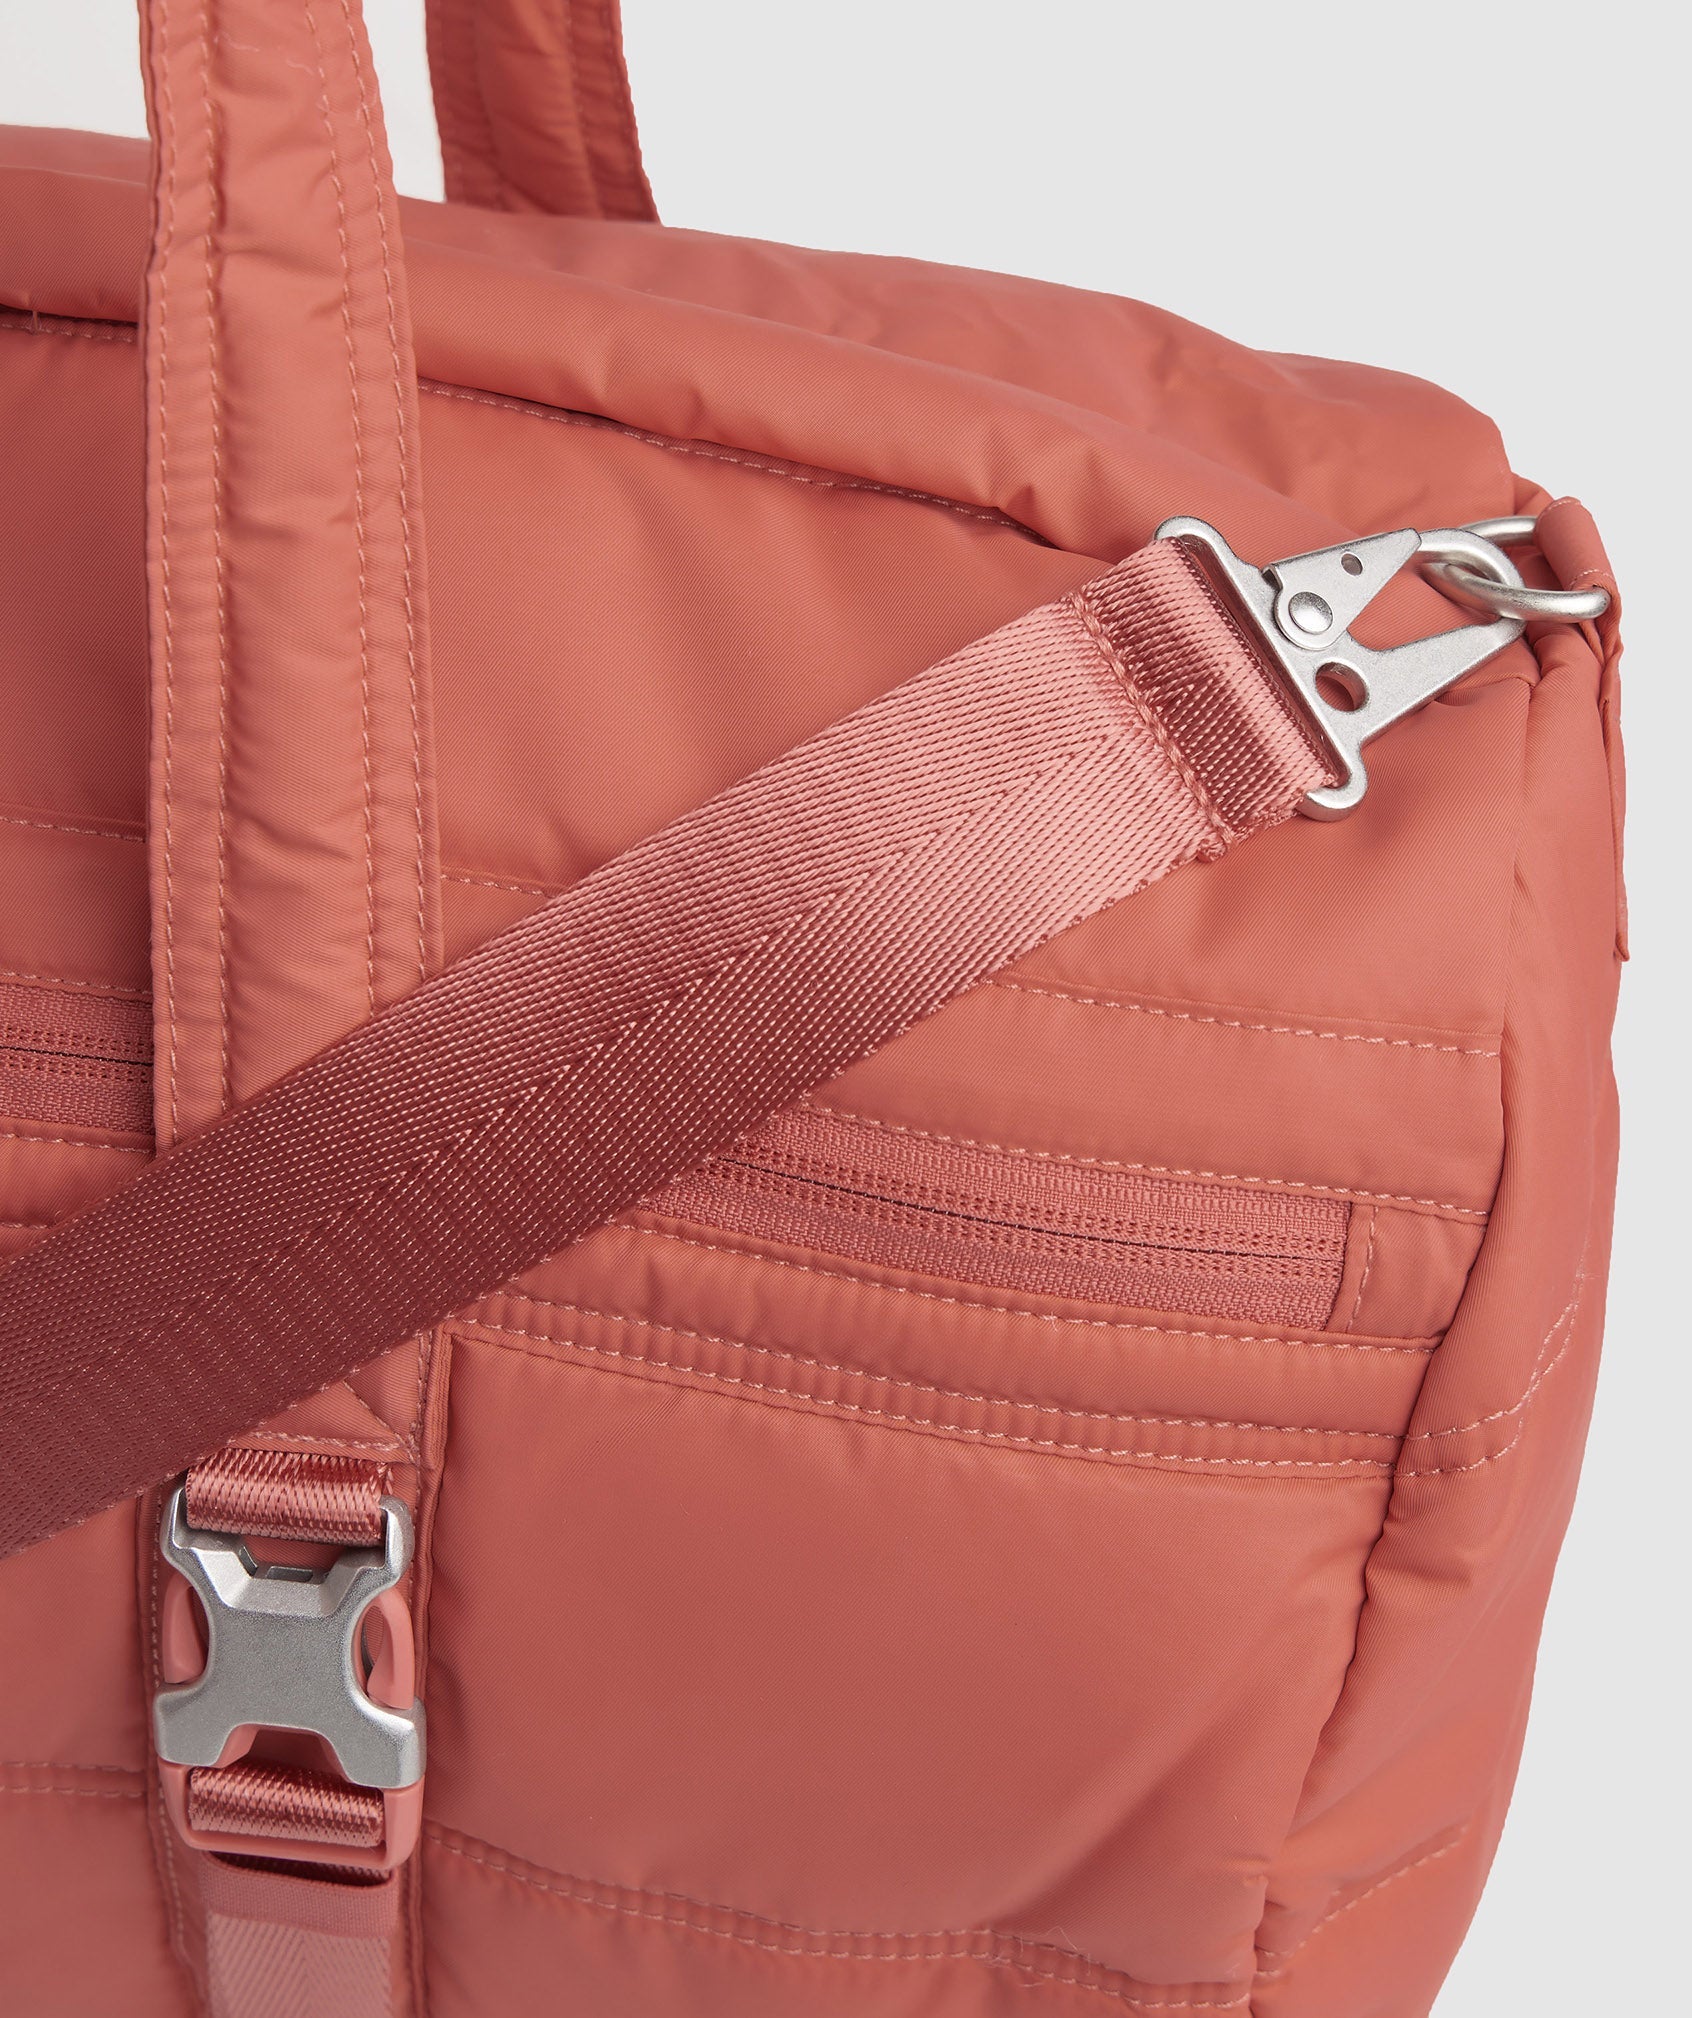 Premium Lifestyle Barrel Bag in Terracotta Pink - view 5